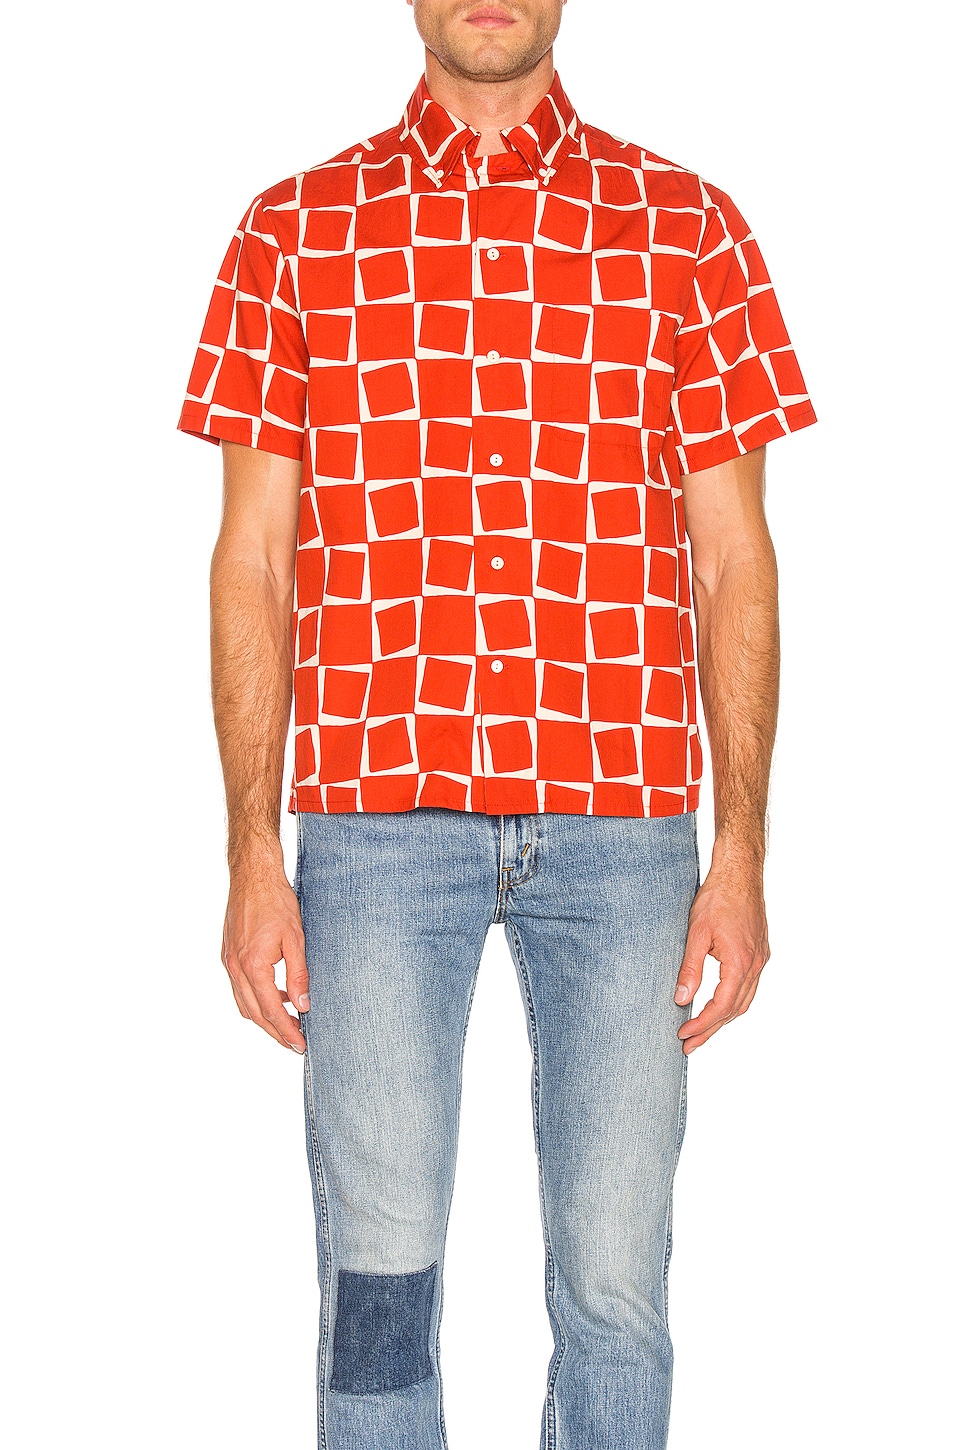 LEVI'S Vintage Clothing 1950's Short Sleeve Shirt in Atomic Square Print |  REVOLVE